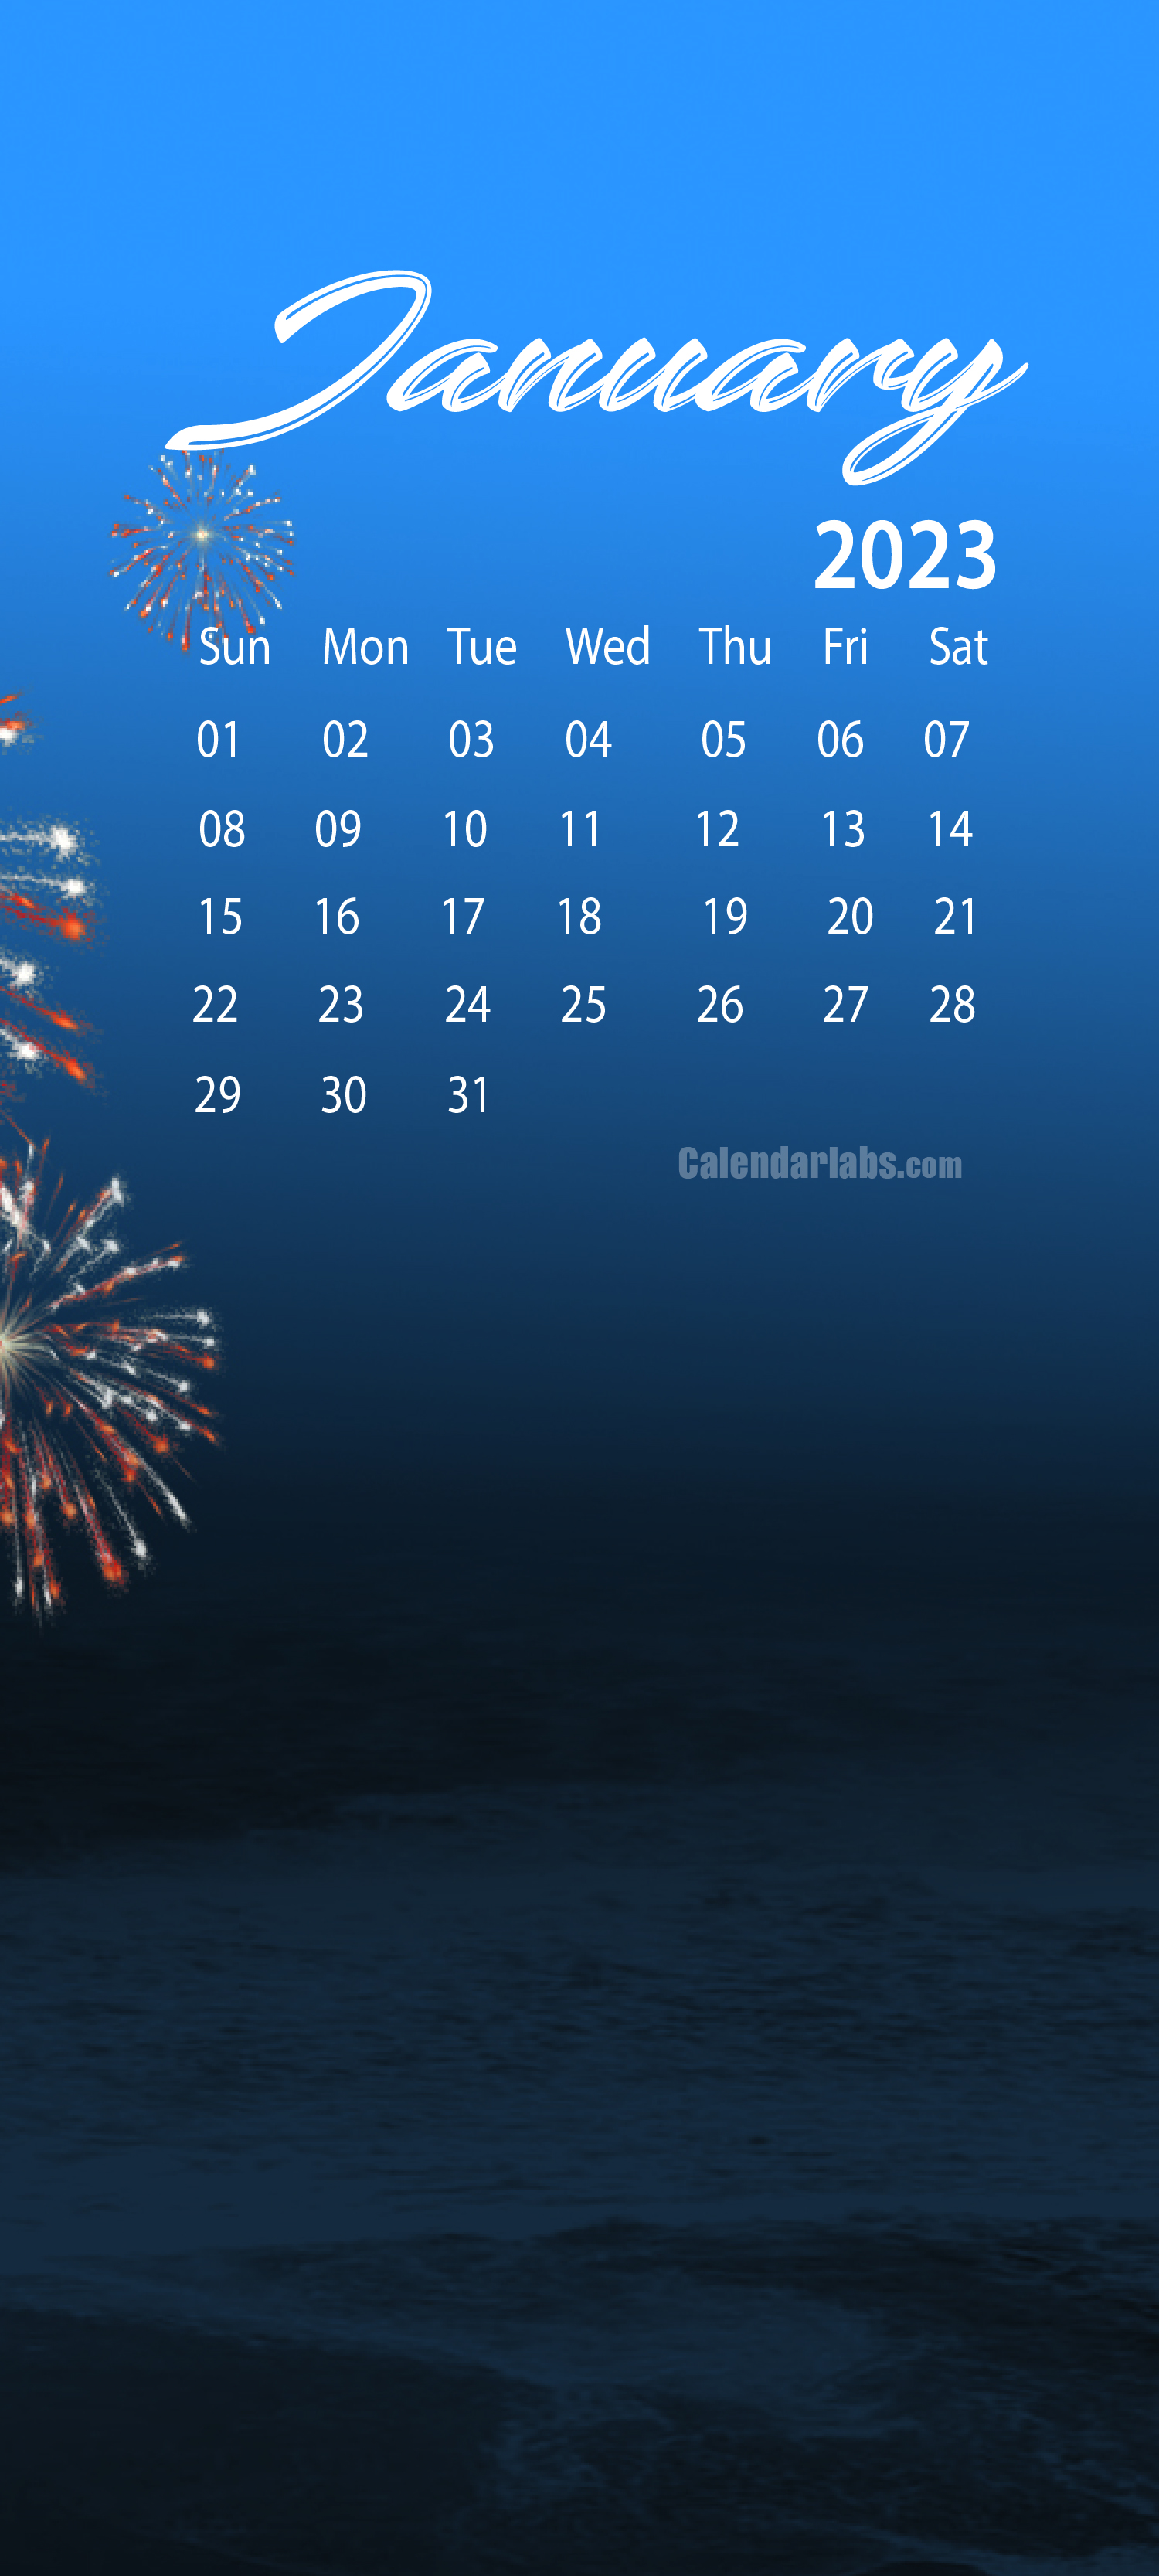 Calendar Desktop Wallpaper 2023 - Printable Calendar 2023